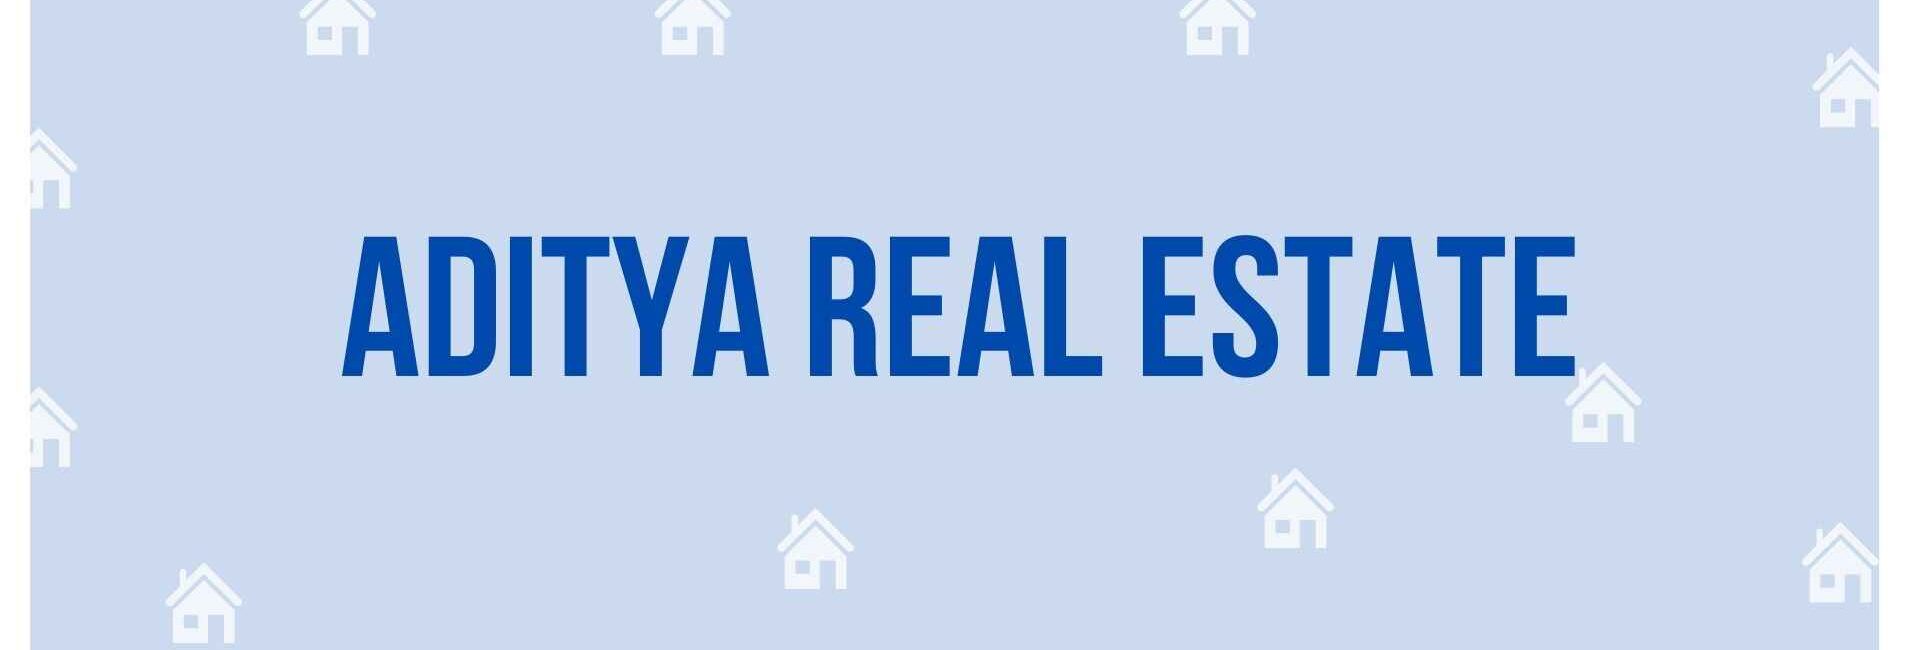 Aditya Real Estate - Property Dealer in Noida